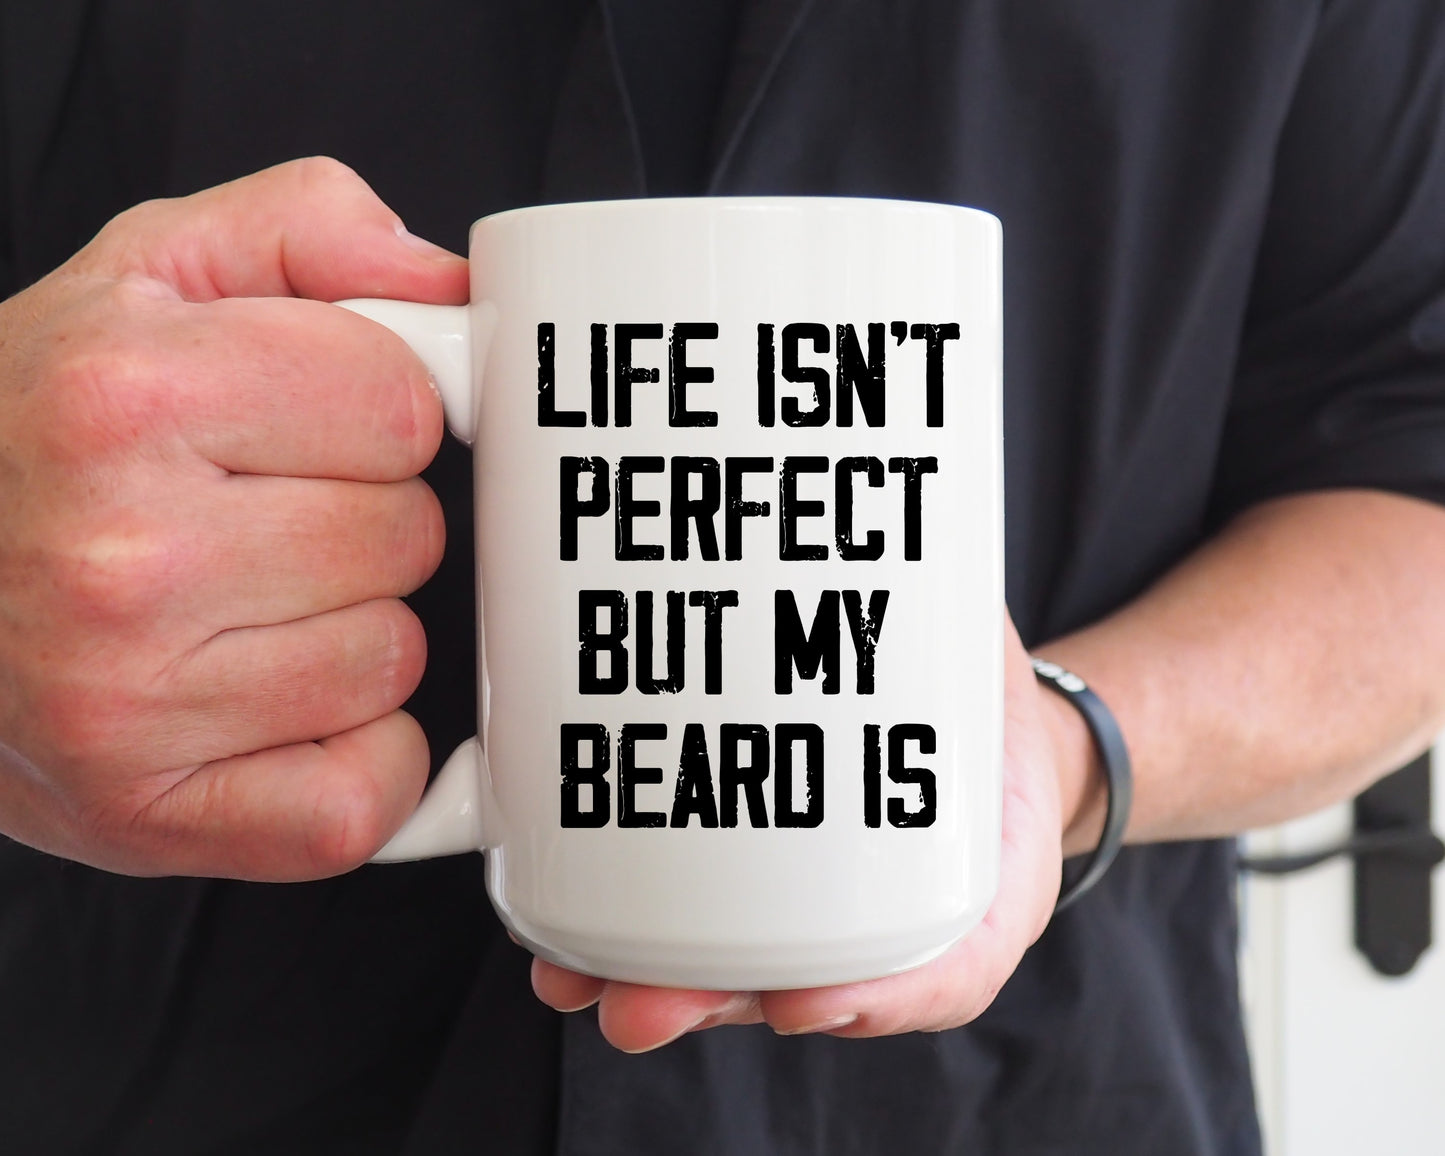 Life isn't perfect but my beard is.